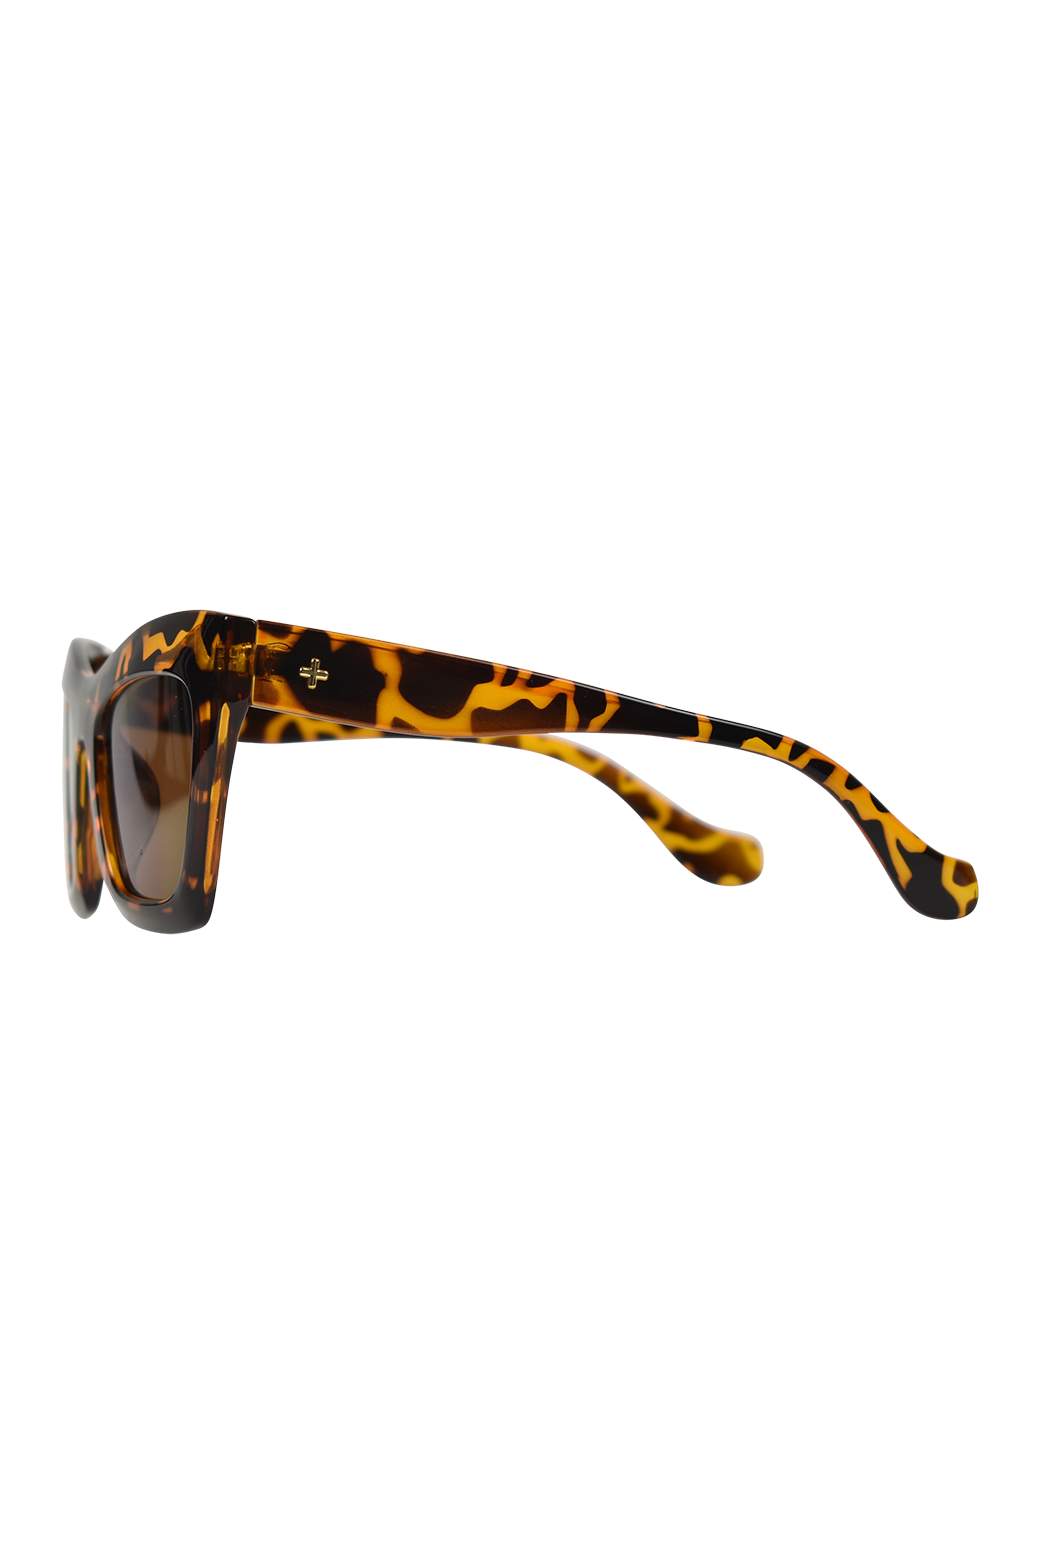 Peta + Jain Jenner Sunglasses Tortoise